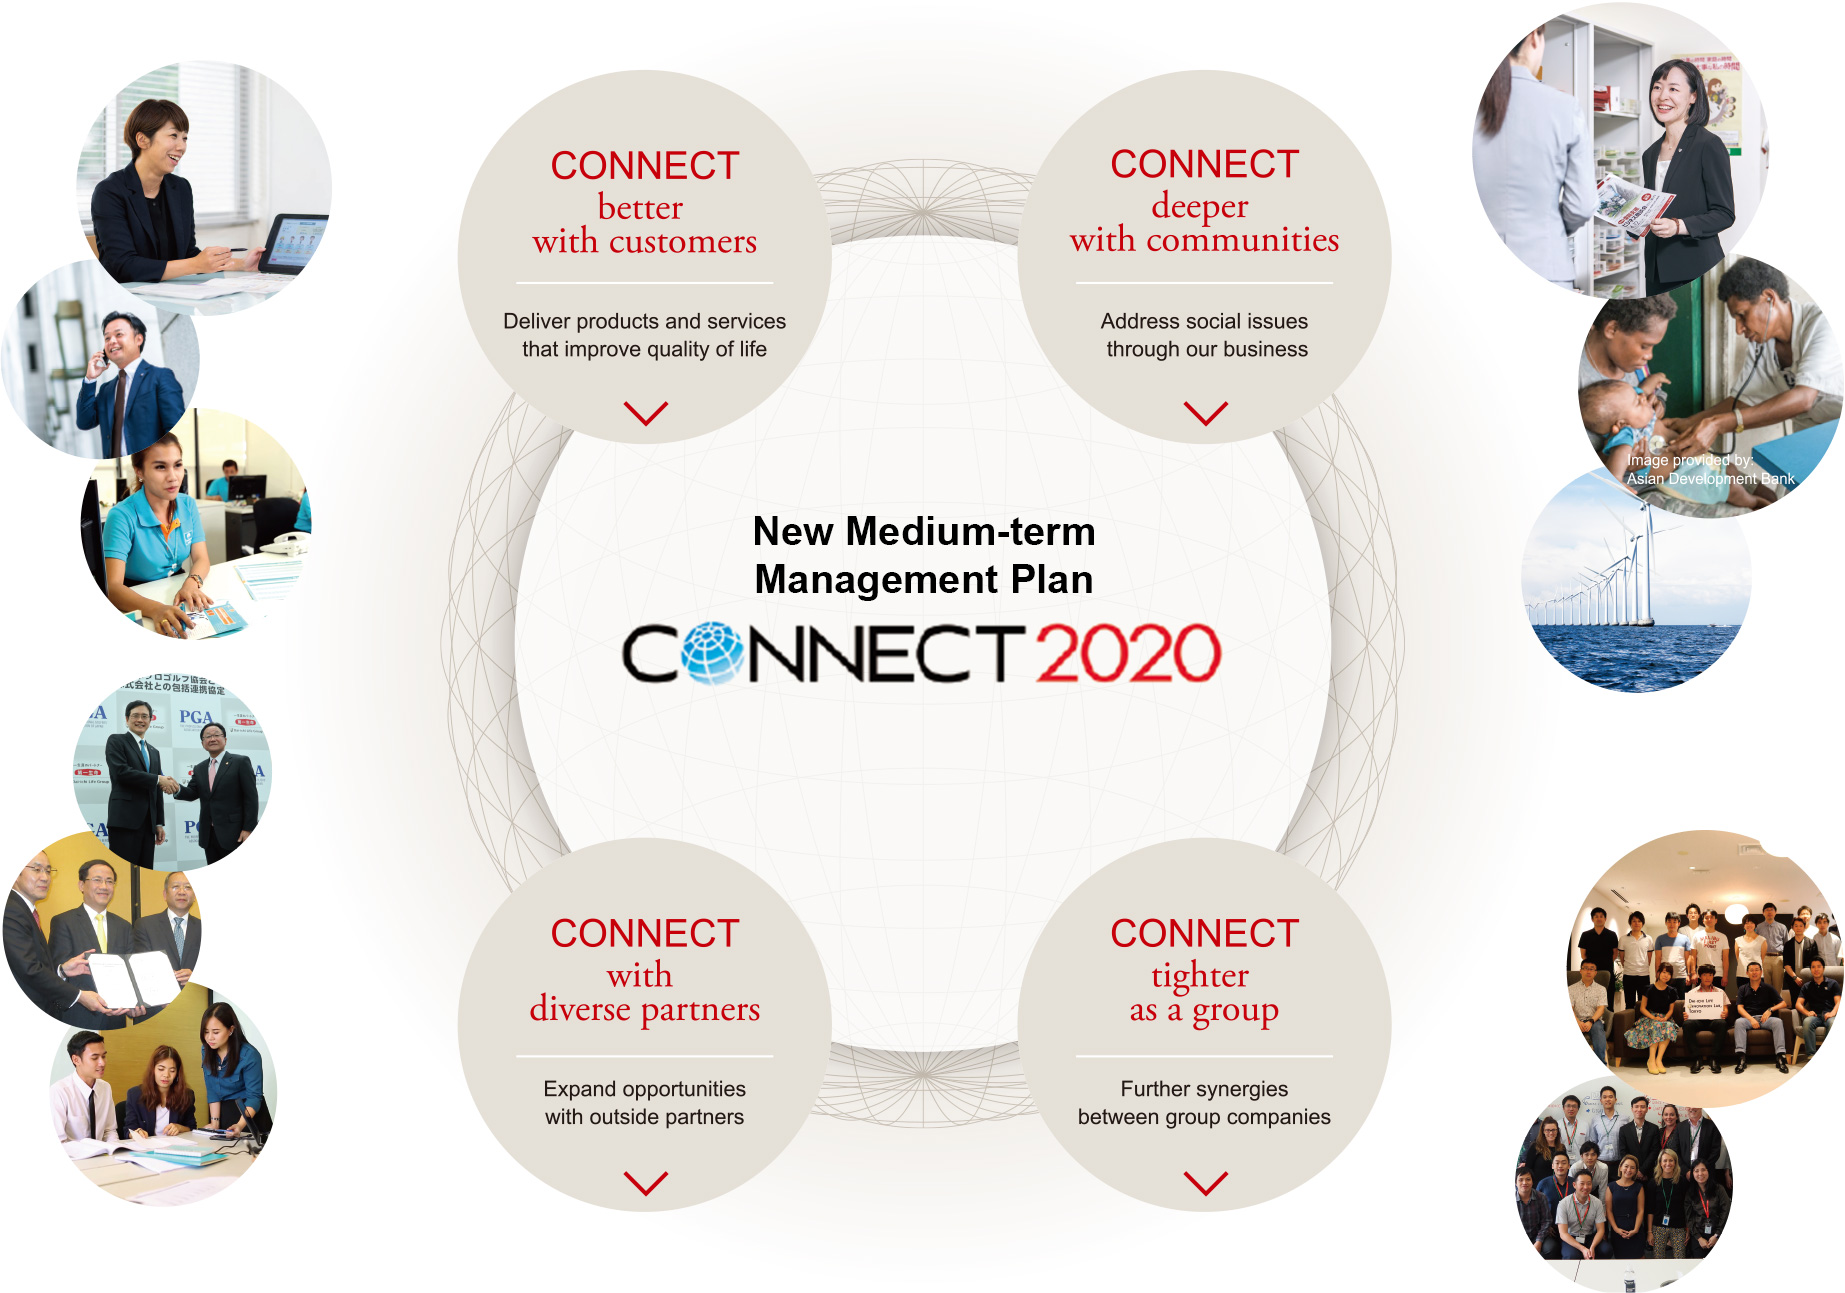 figure : CONNECT 2020